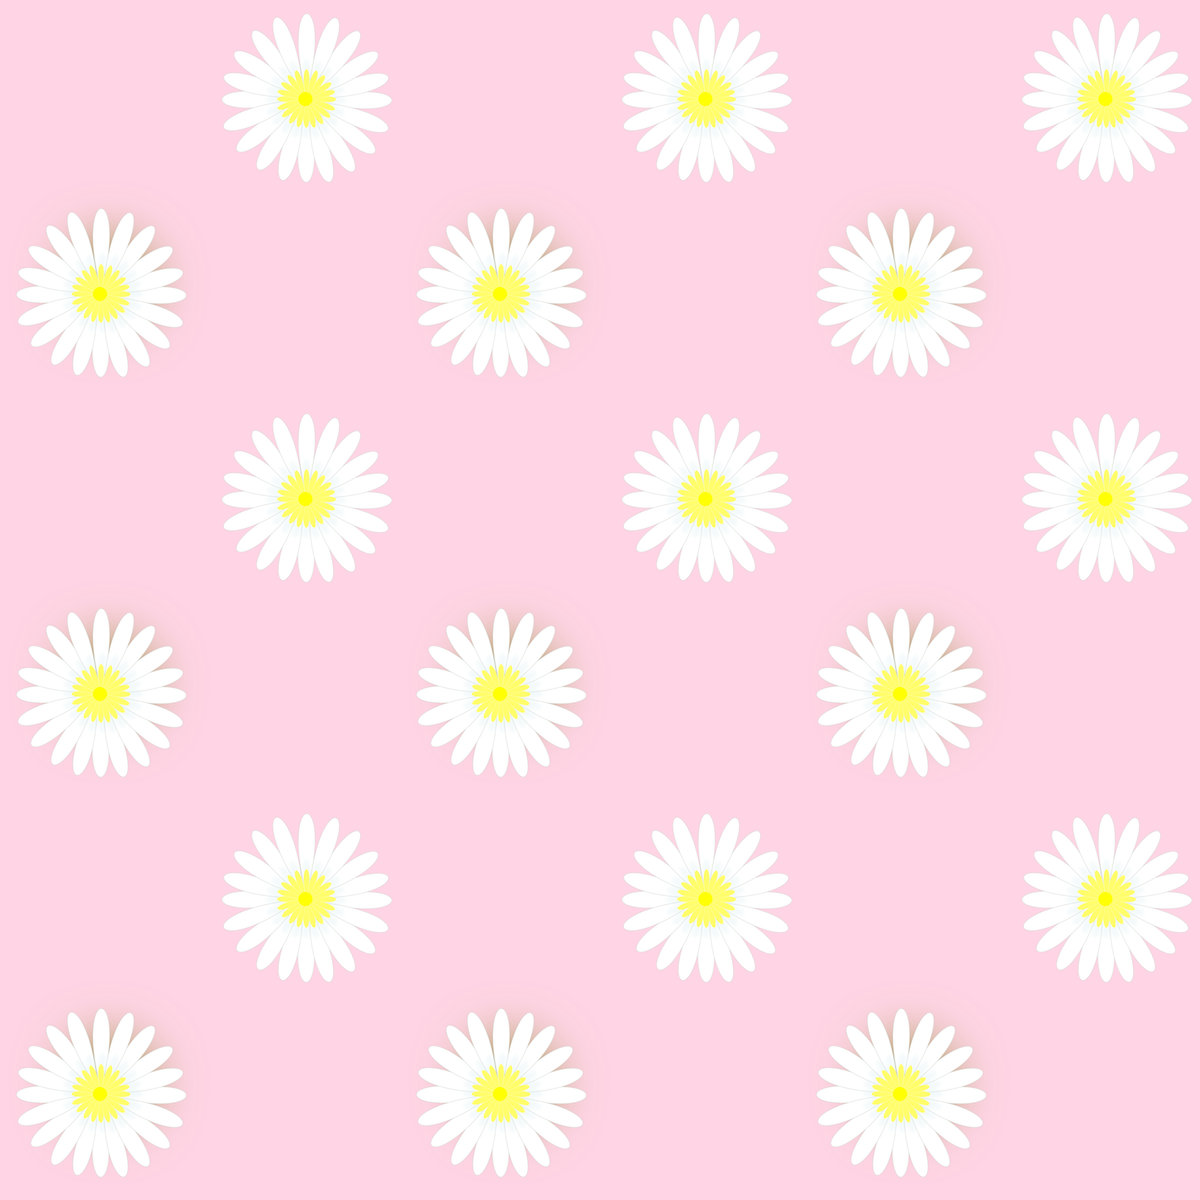 Free digital daisy flower scrapbooking papers   ausdruckbare